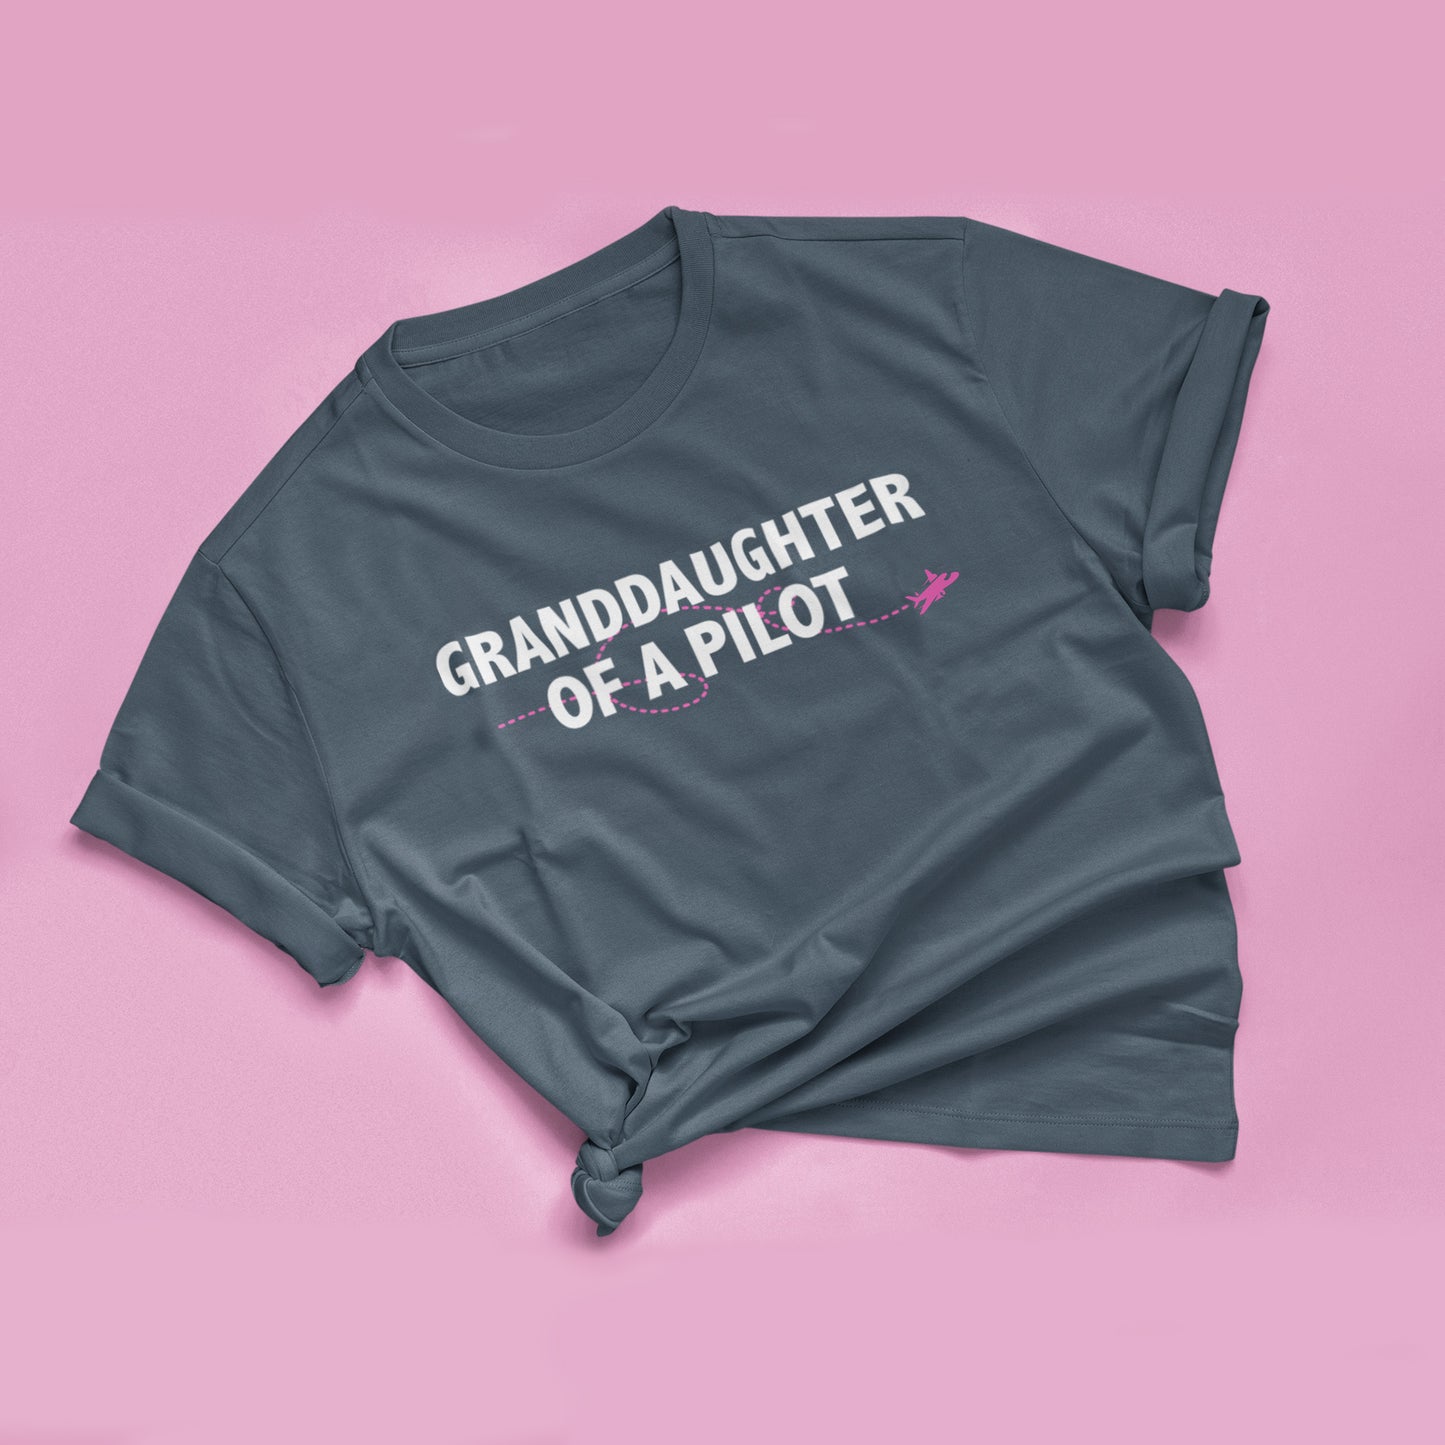 Granddaughter of the/a Pilot T-shirt